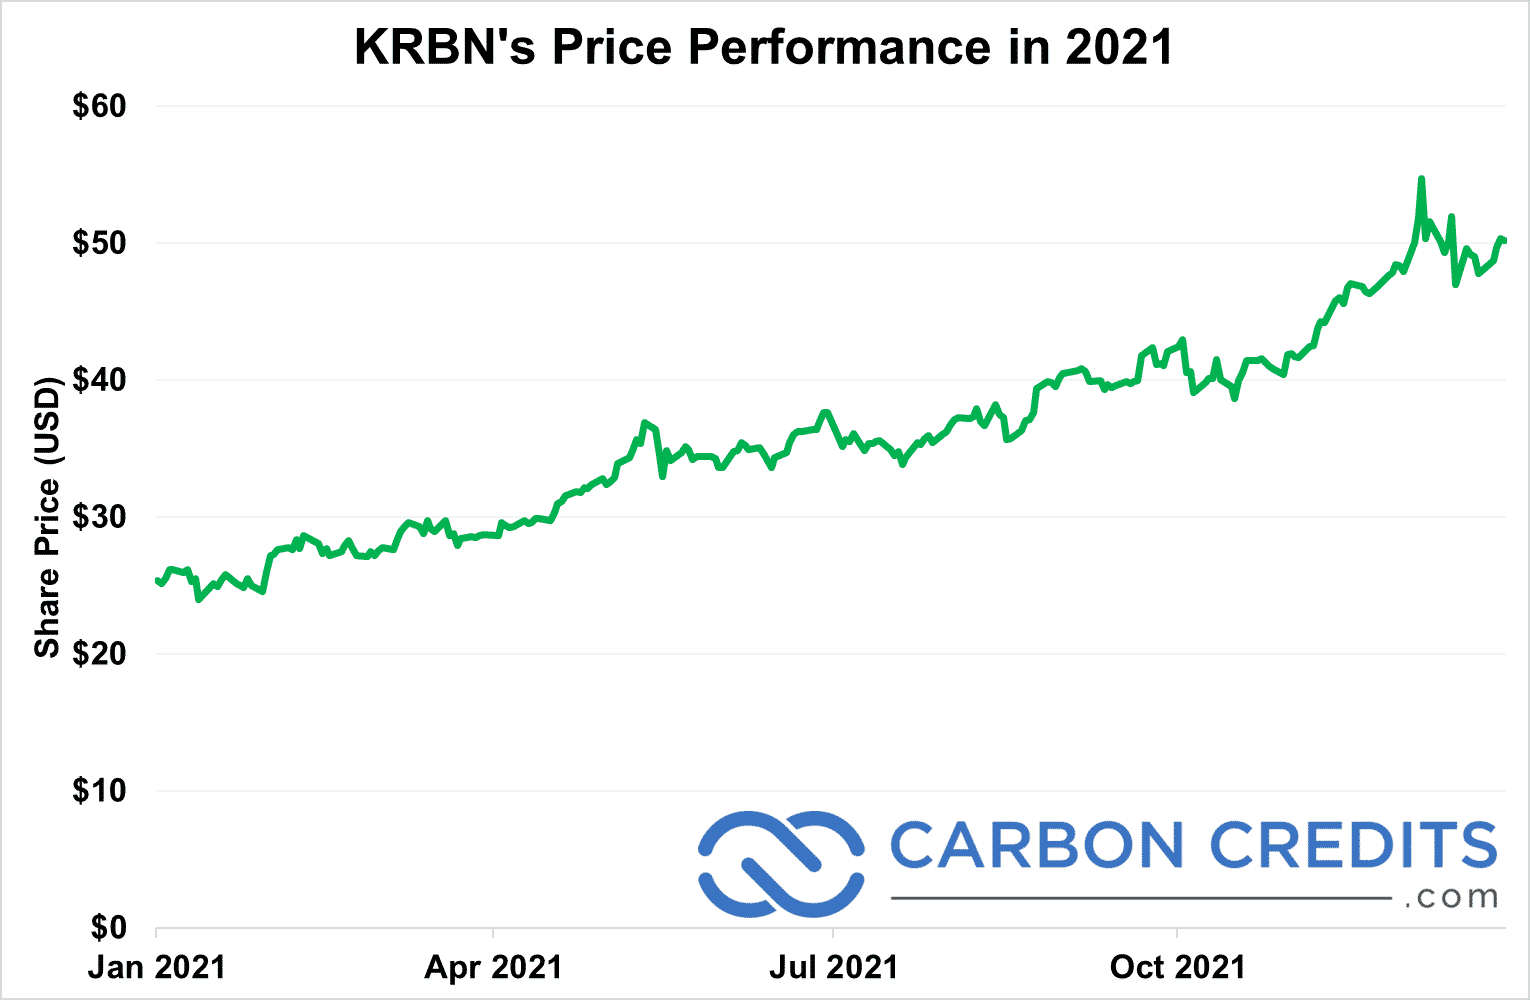 KRBN Price performance in 2021